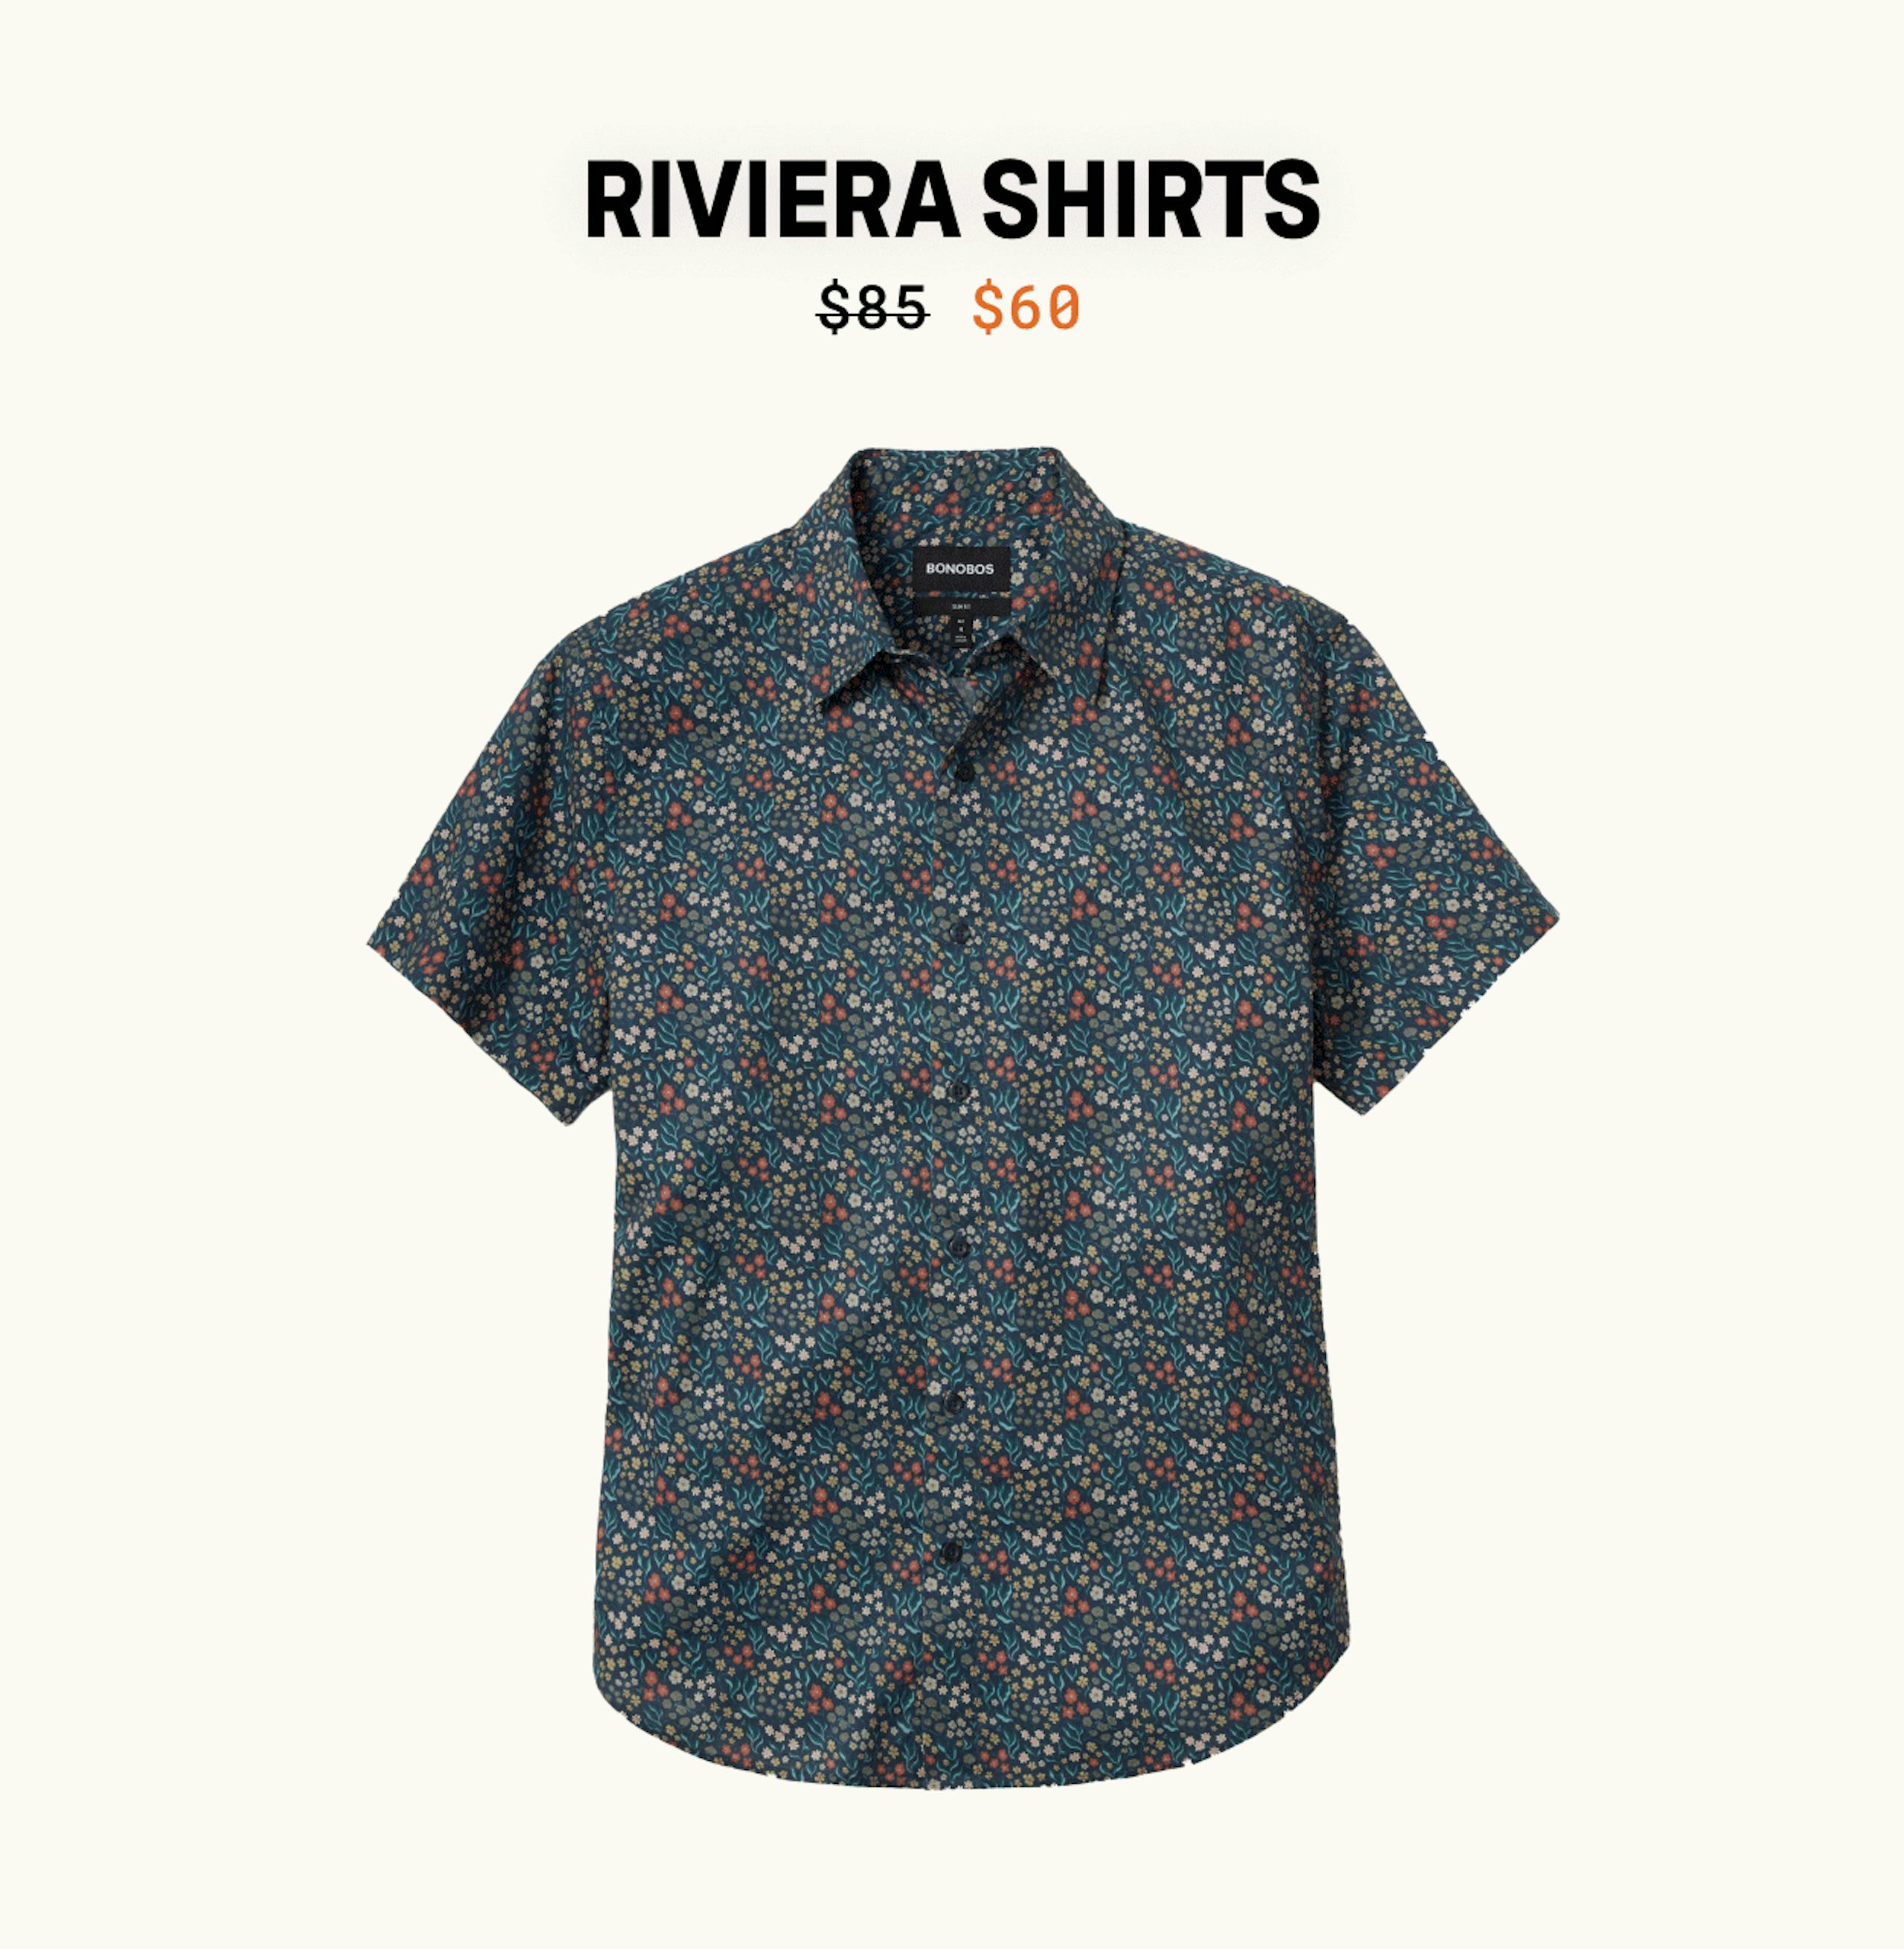 Riviera Short Sleeve Shirt $60